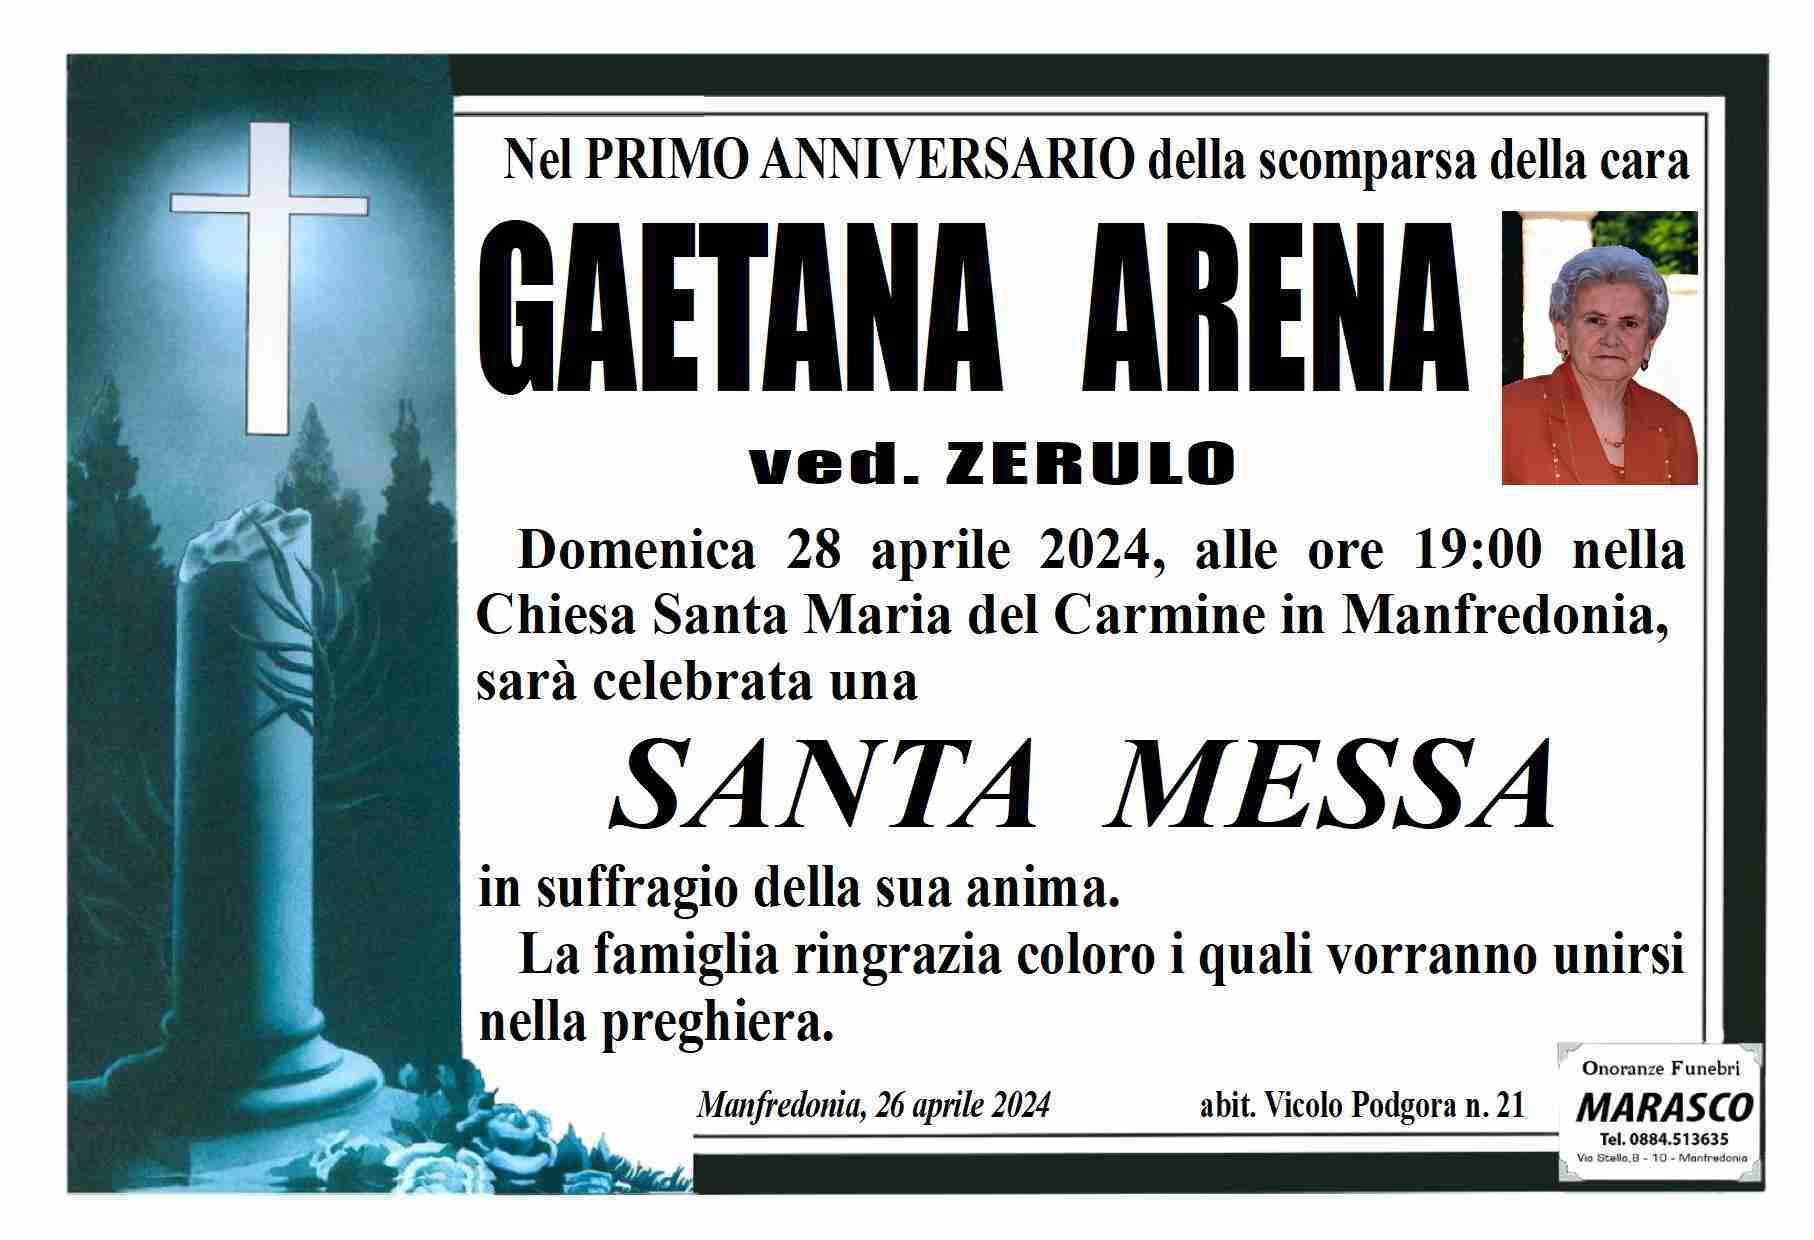 Gaetana Arena